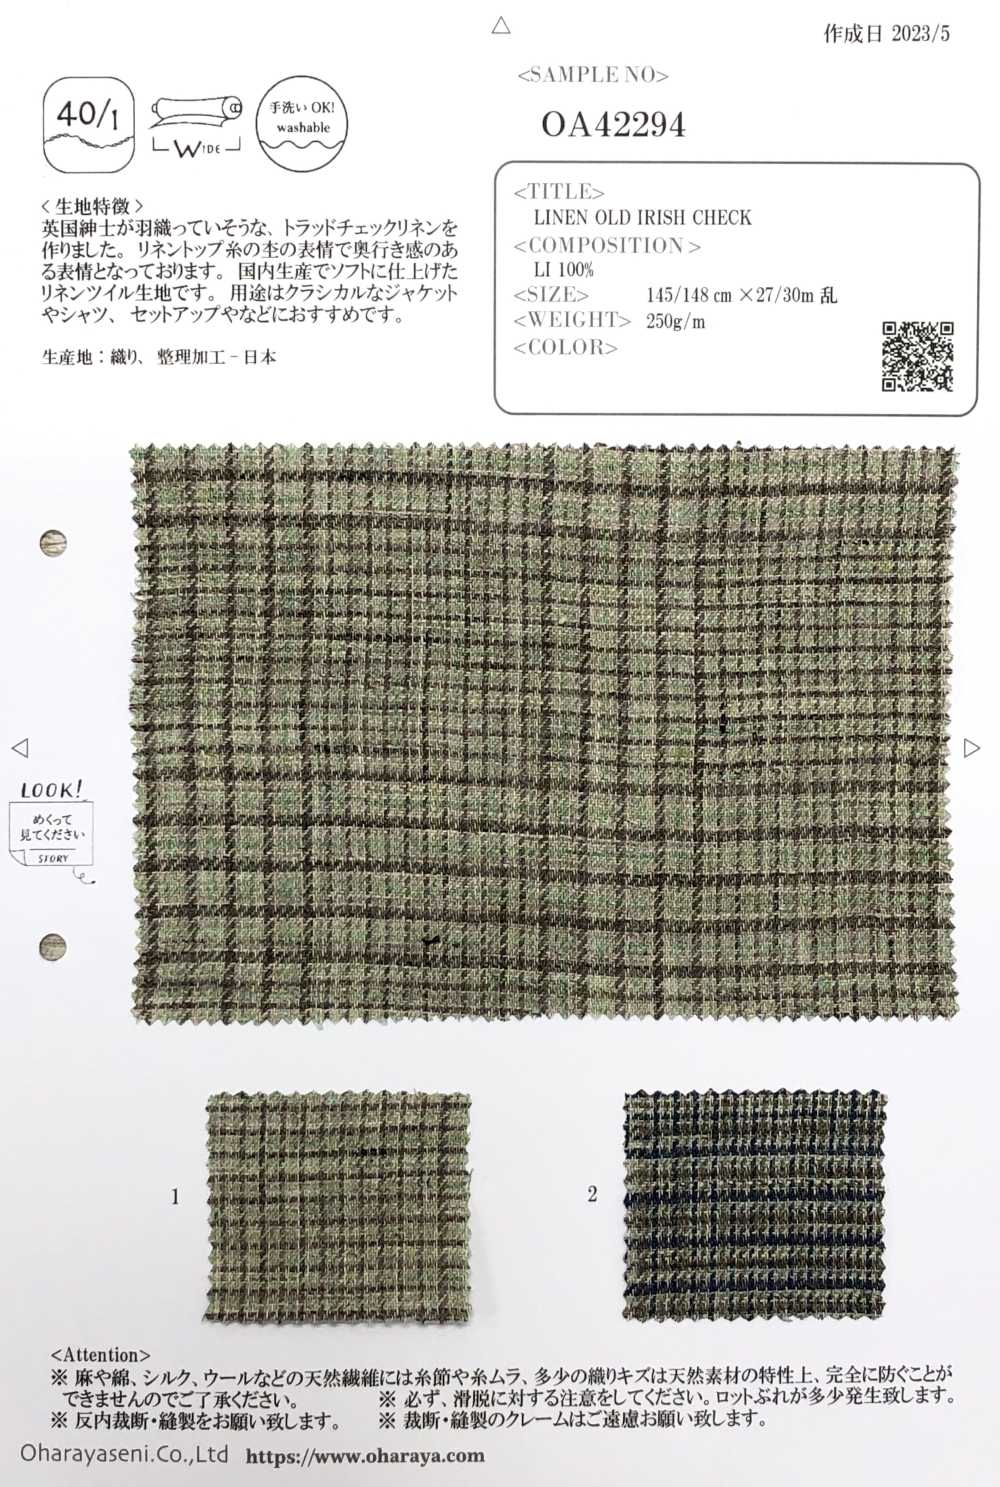 OA42294 LINO CHEQUE IRLANDÉS ANTIGUO[Fabrica Textil] Oharayaseni